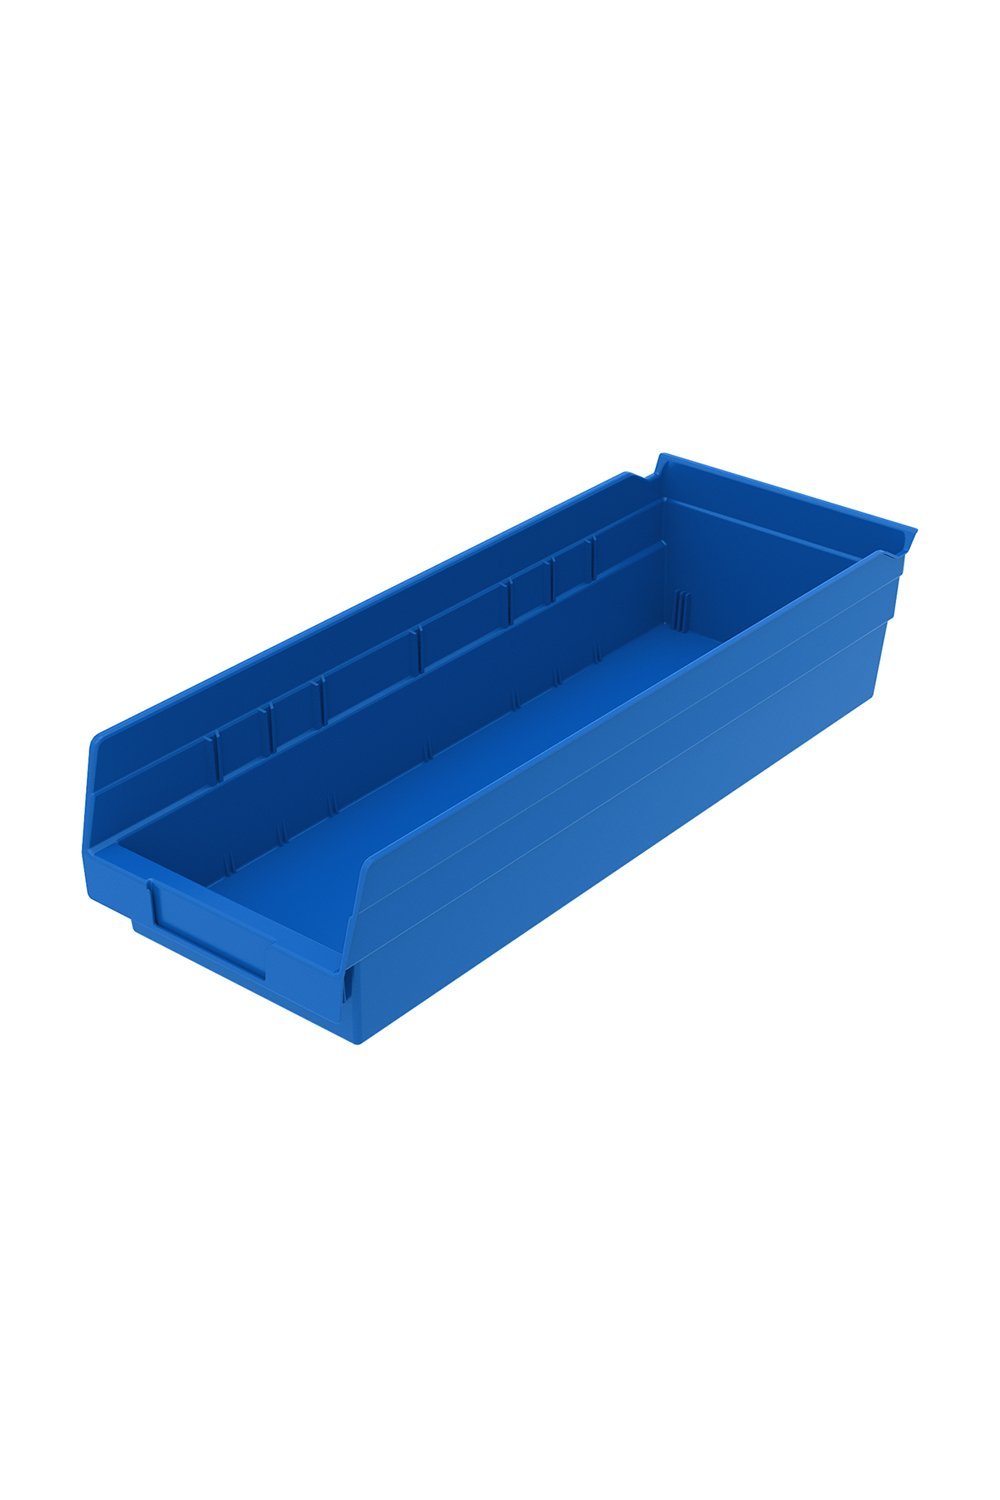 Shelf Bin for 18"D Shelves Bins & Containers Acart 17-7/8'' x 6-5/8'' x 4'' Blue 